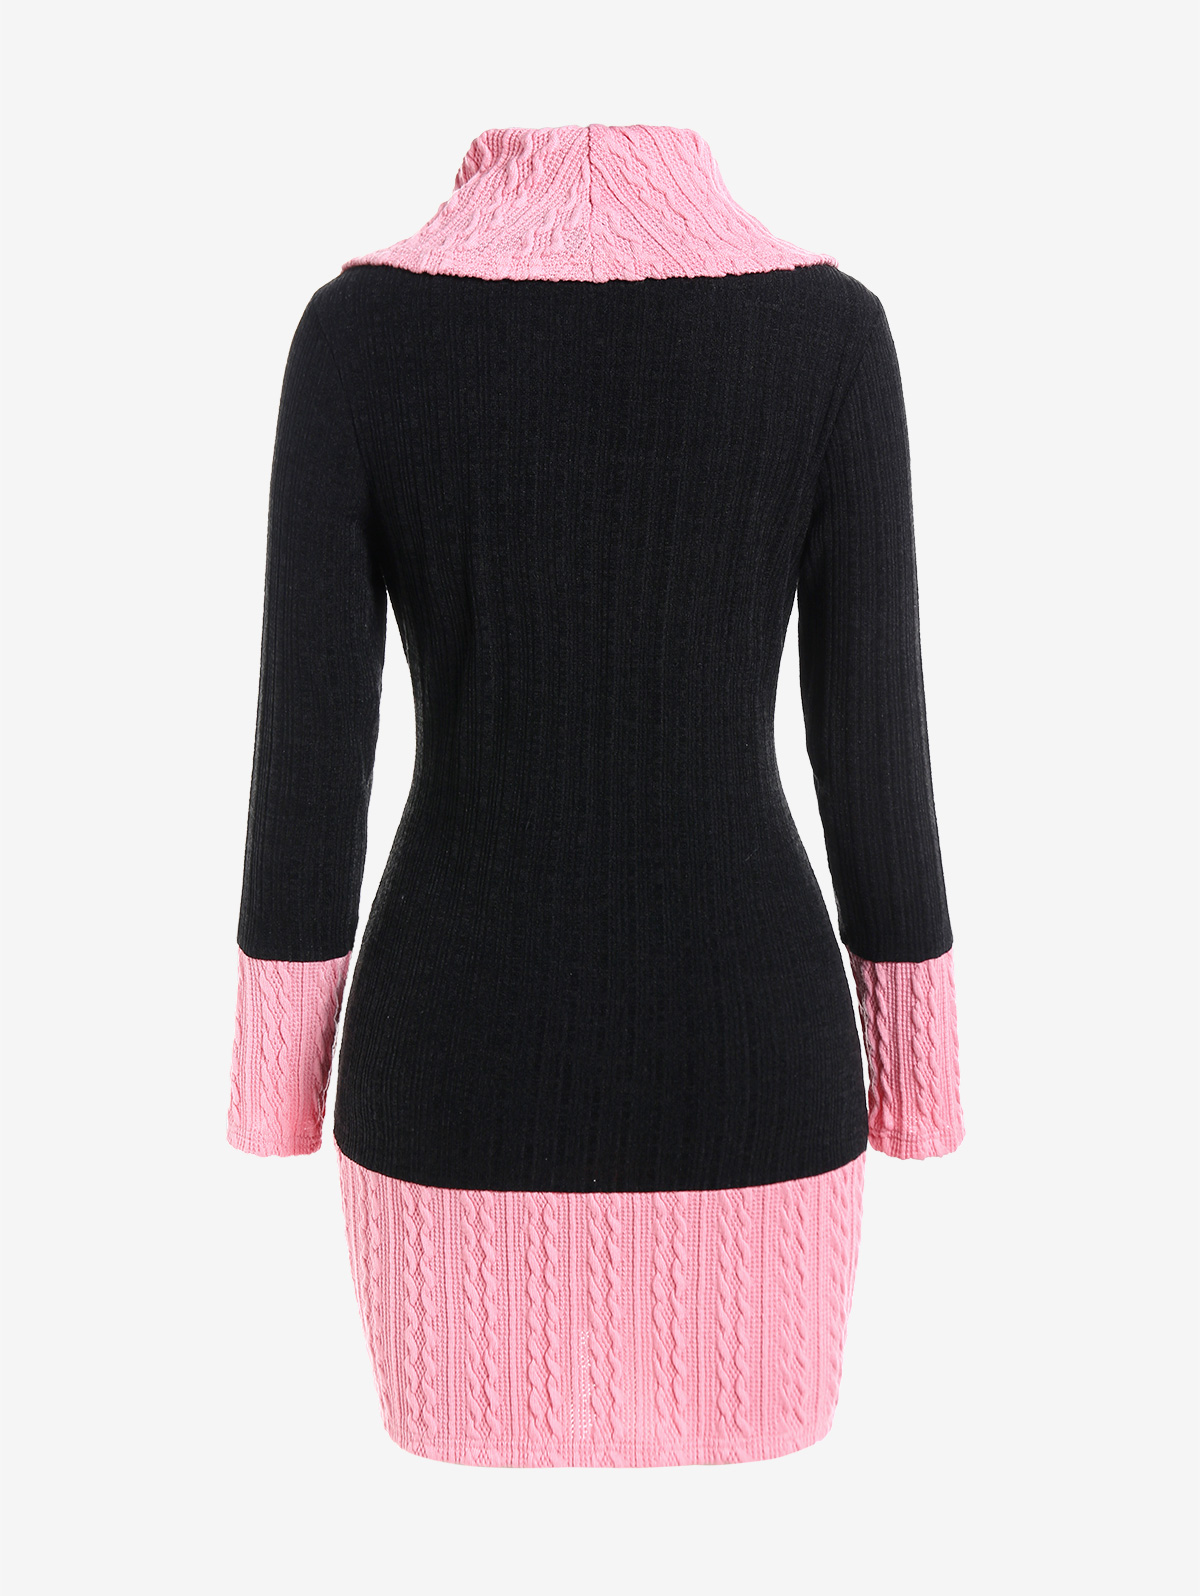 Goth Pink Sweater